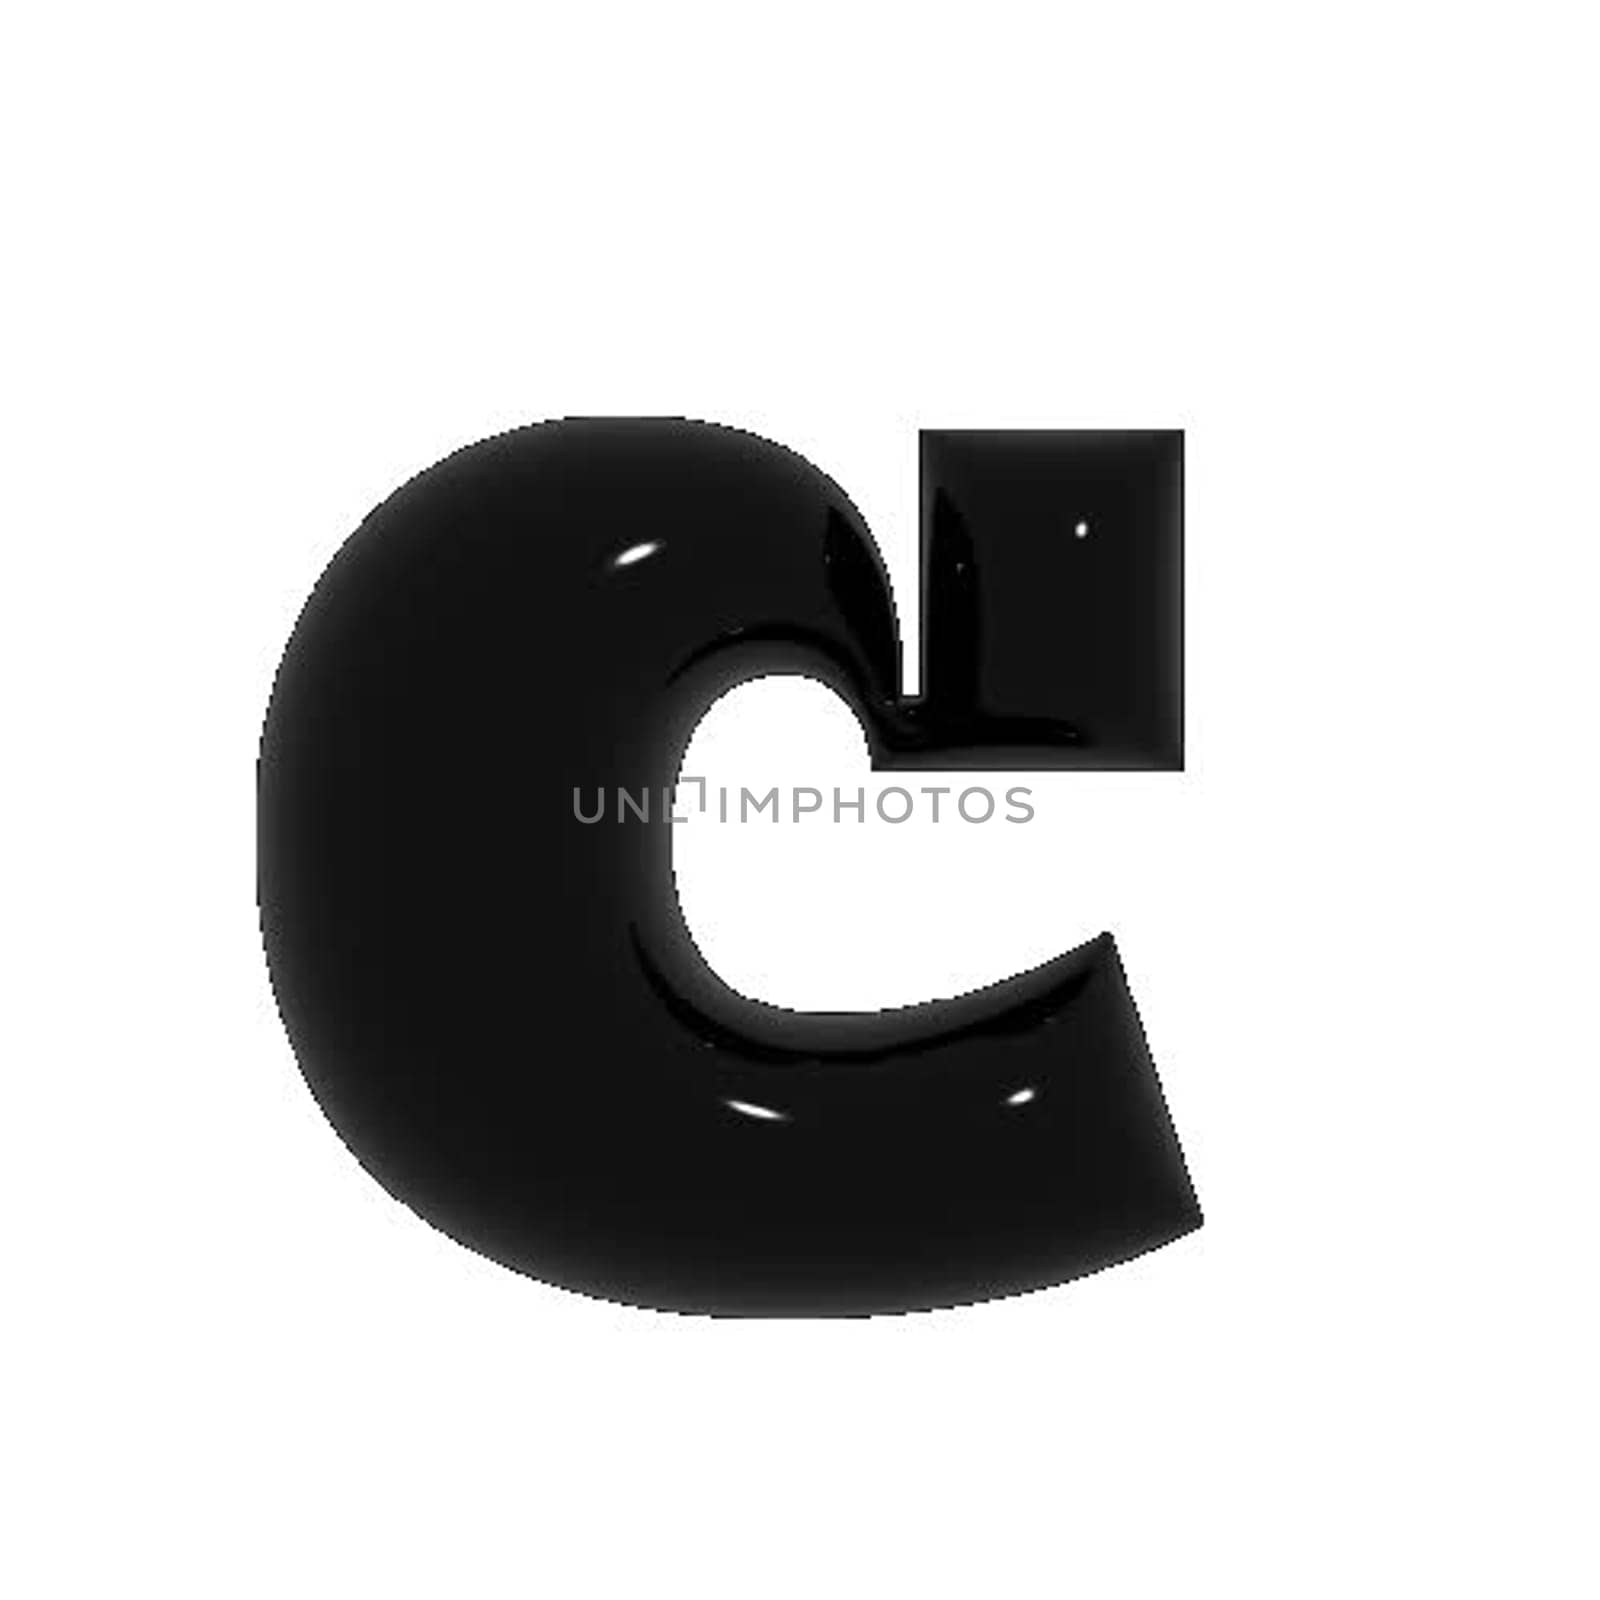 Black metal shiny reflective letter C 3D illustration by Dustick